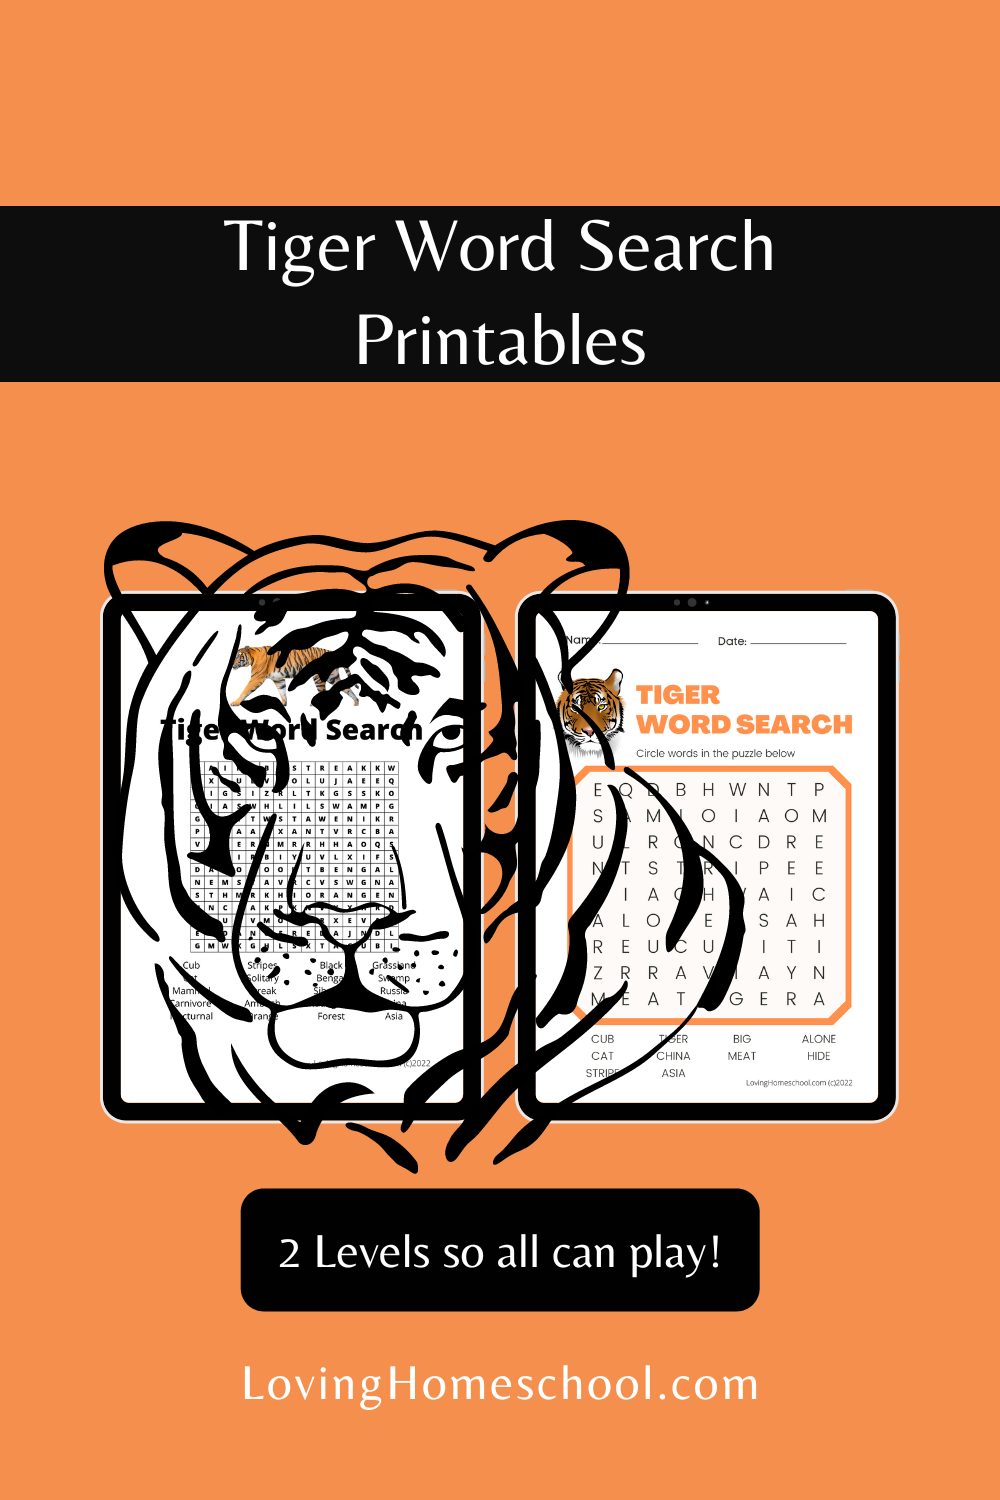 Tiger Word Search Printables Pinterest Pin